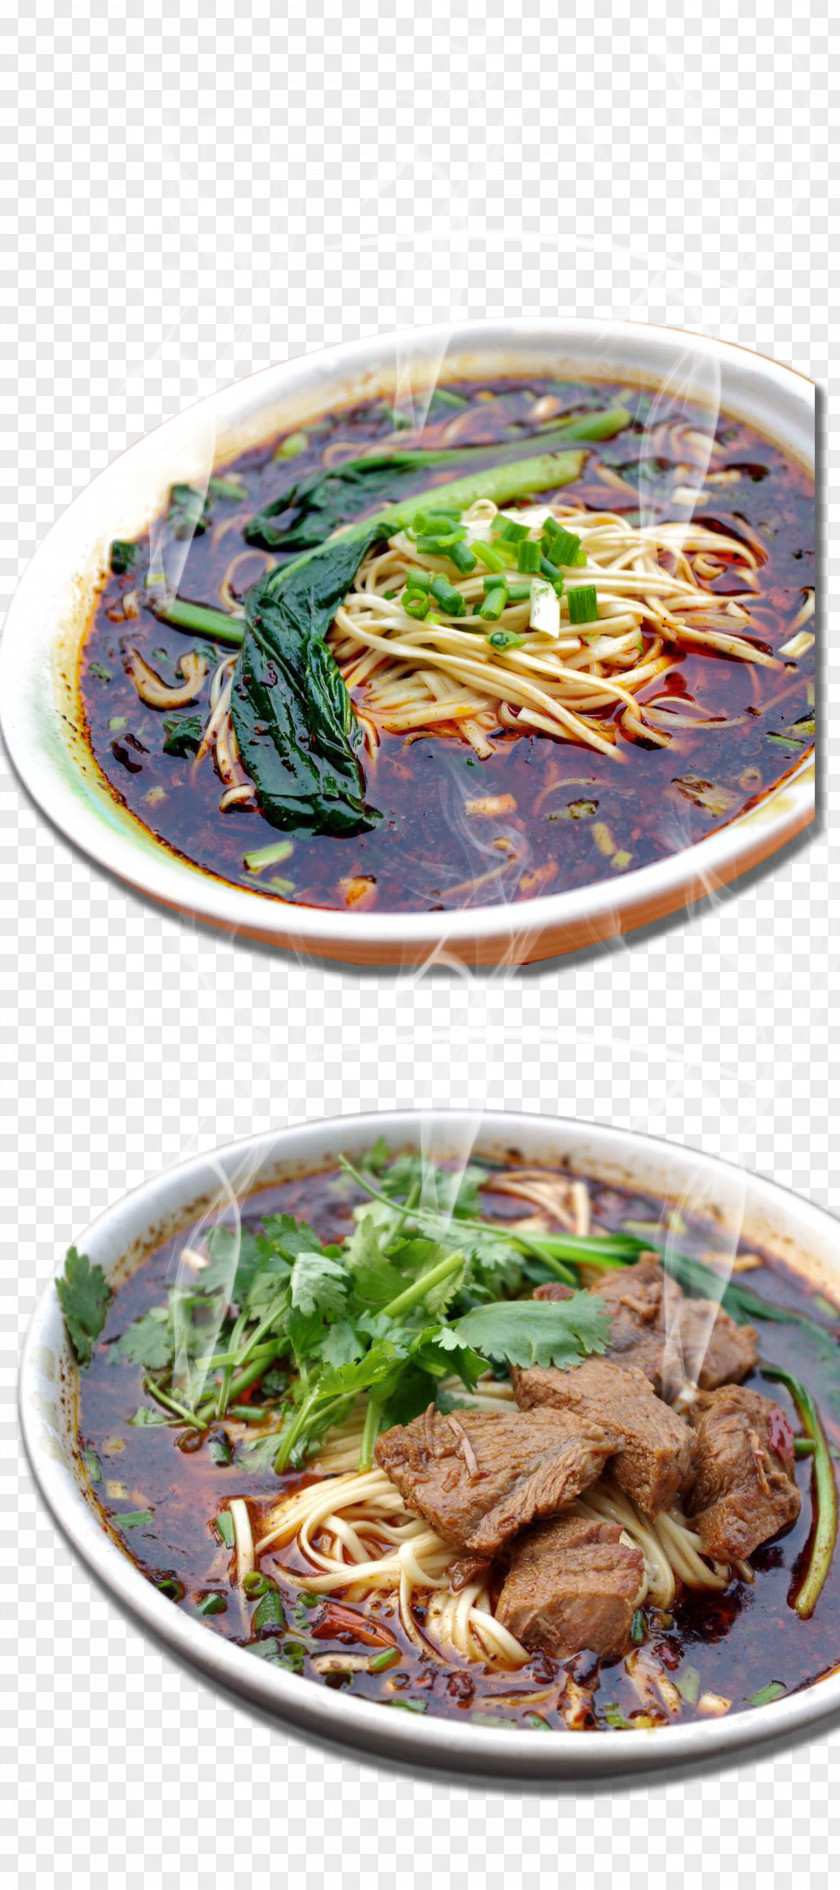 Beef Vegetable Face Asian Cuisine Ramen Noodle Soup Breakfast PNG